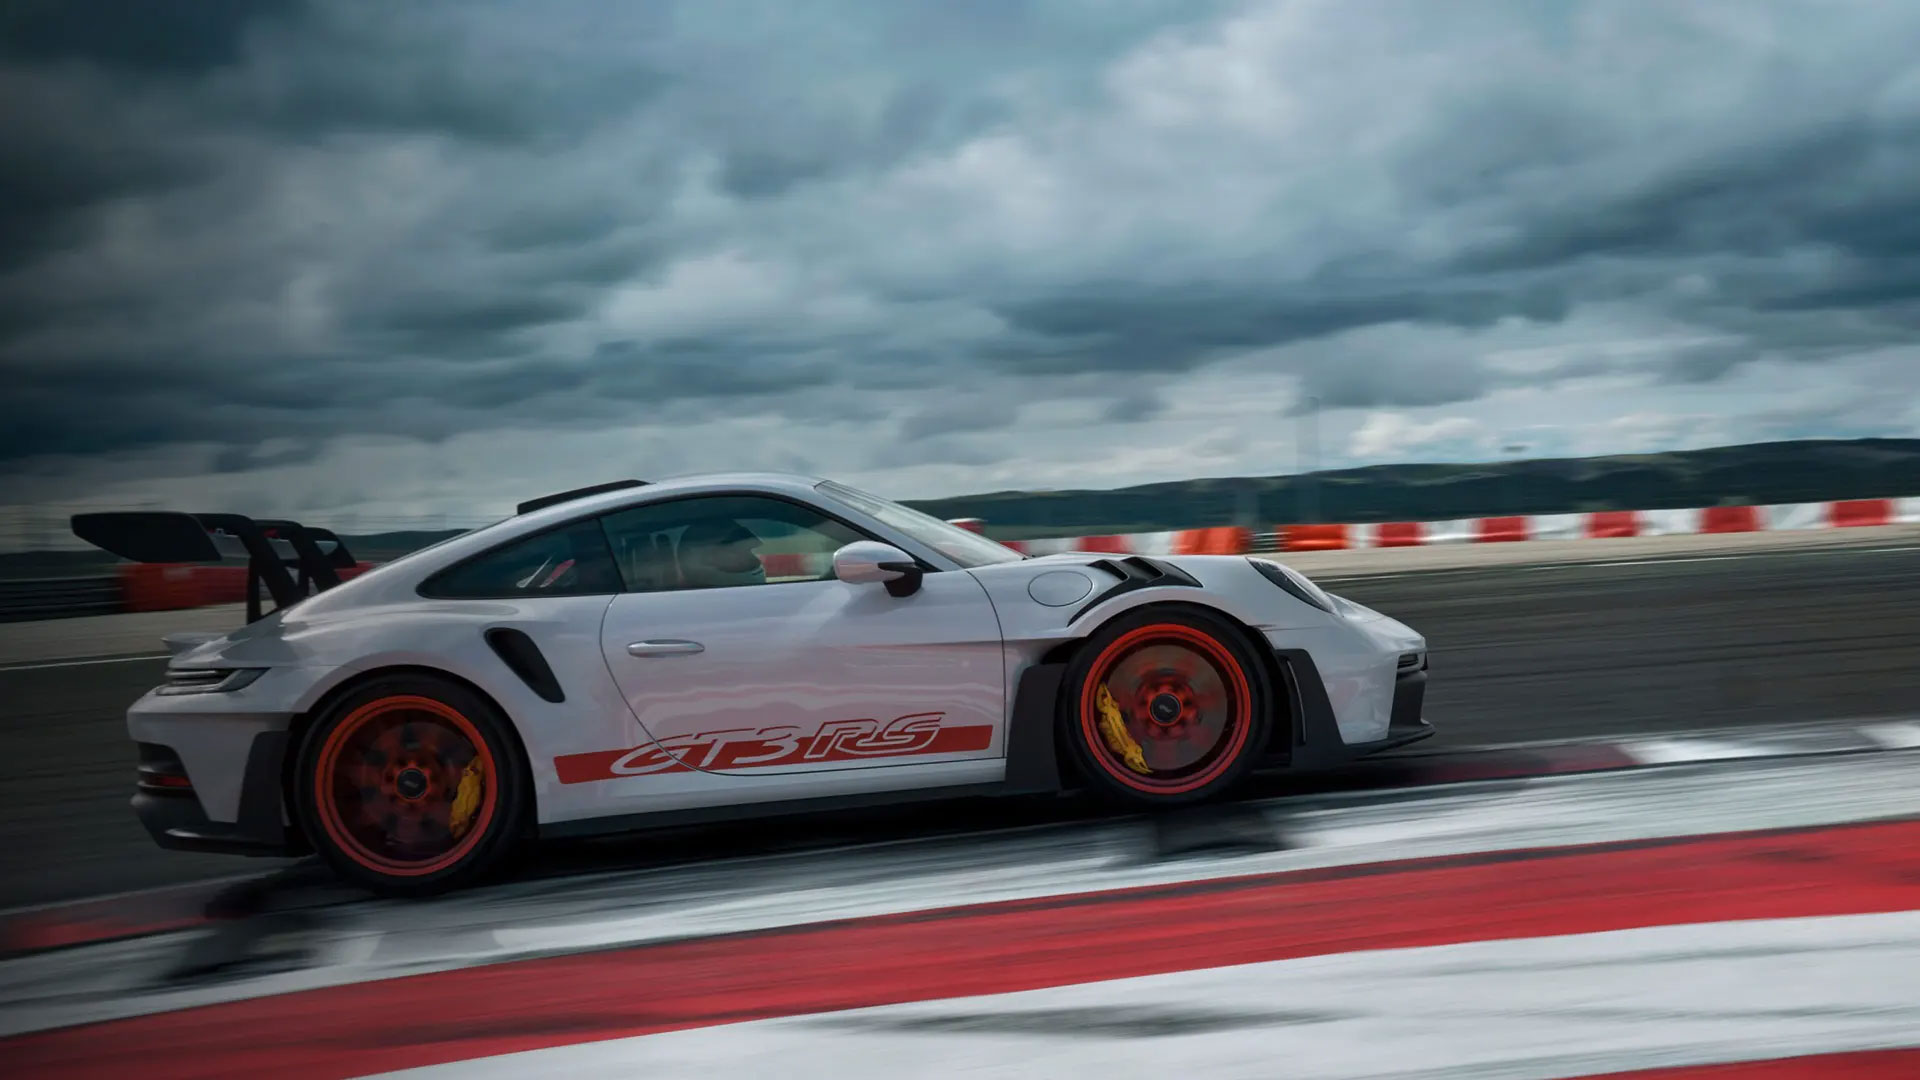 Porsche - Nefes kesici hafiflik.